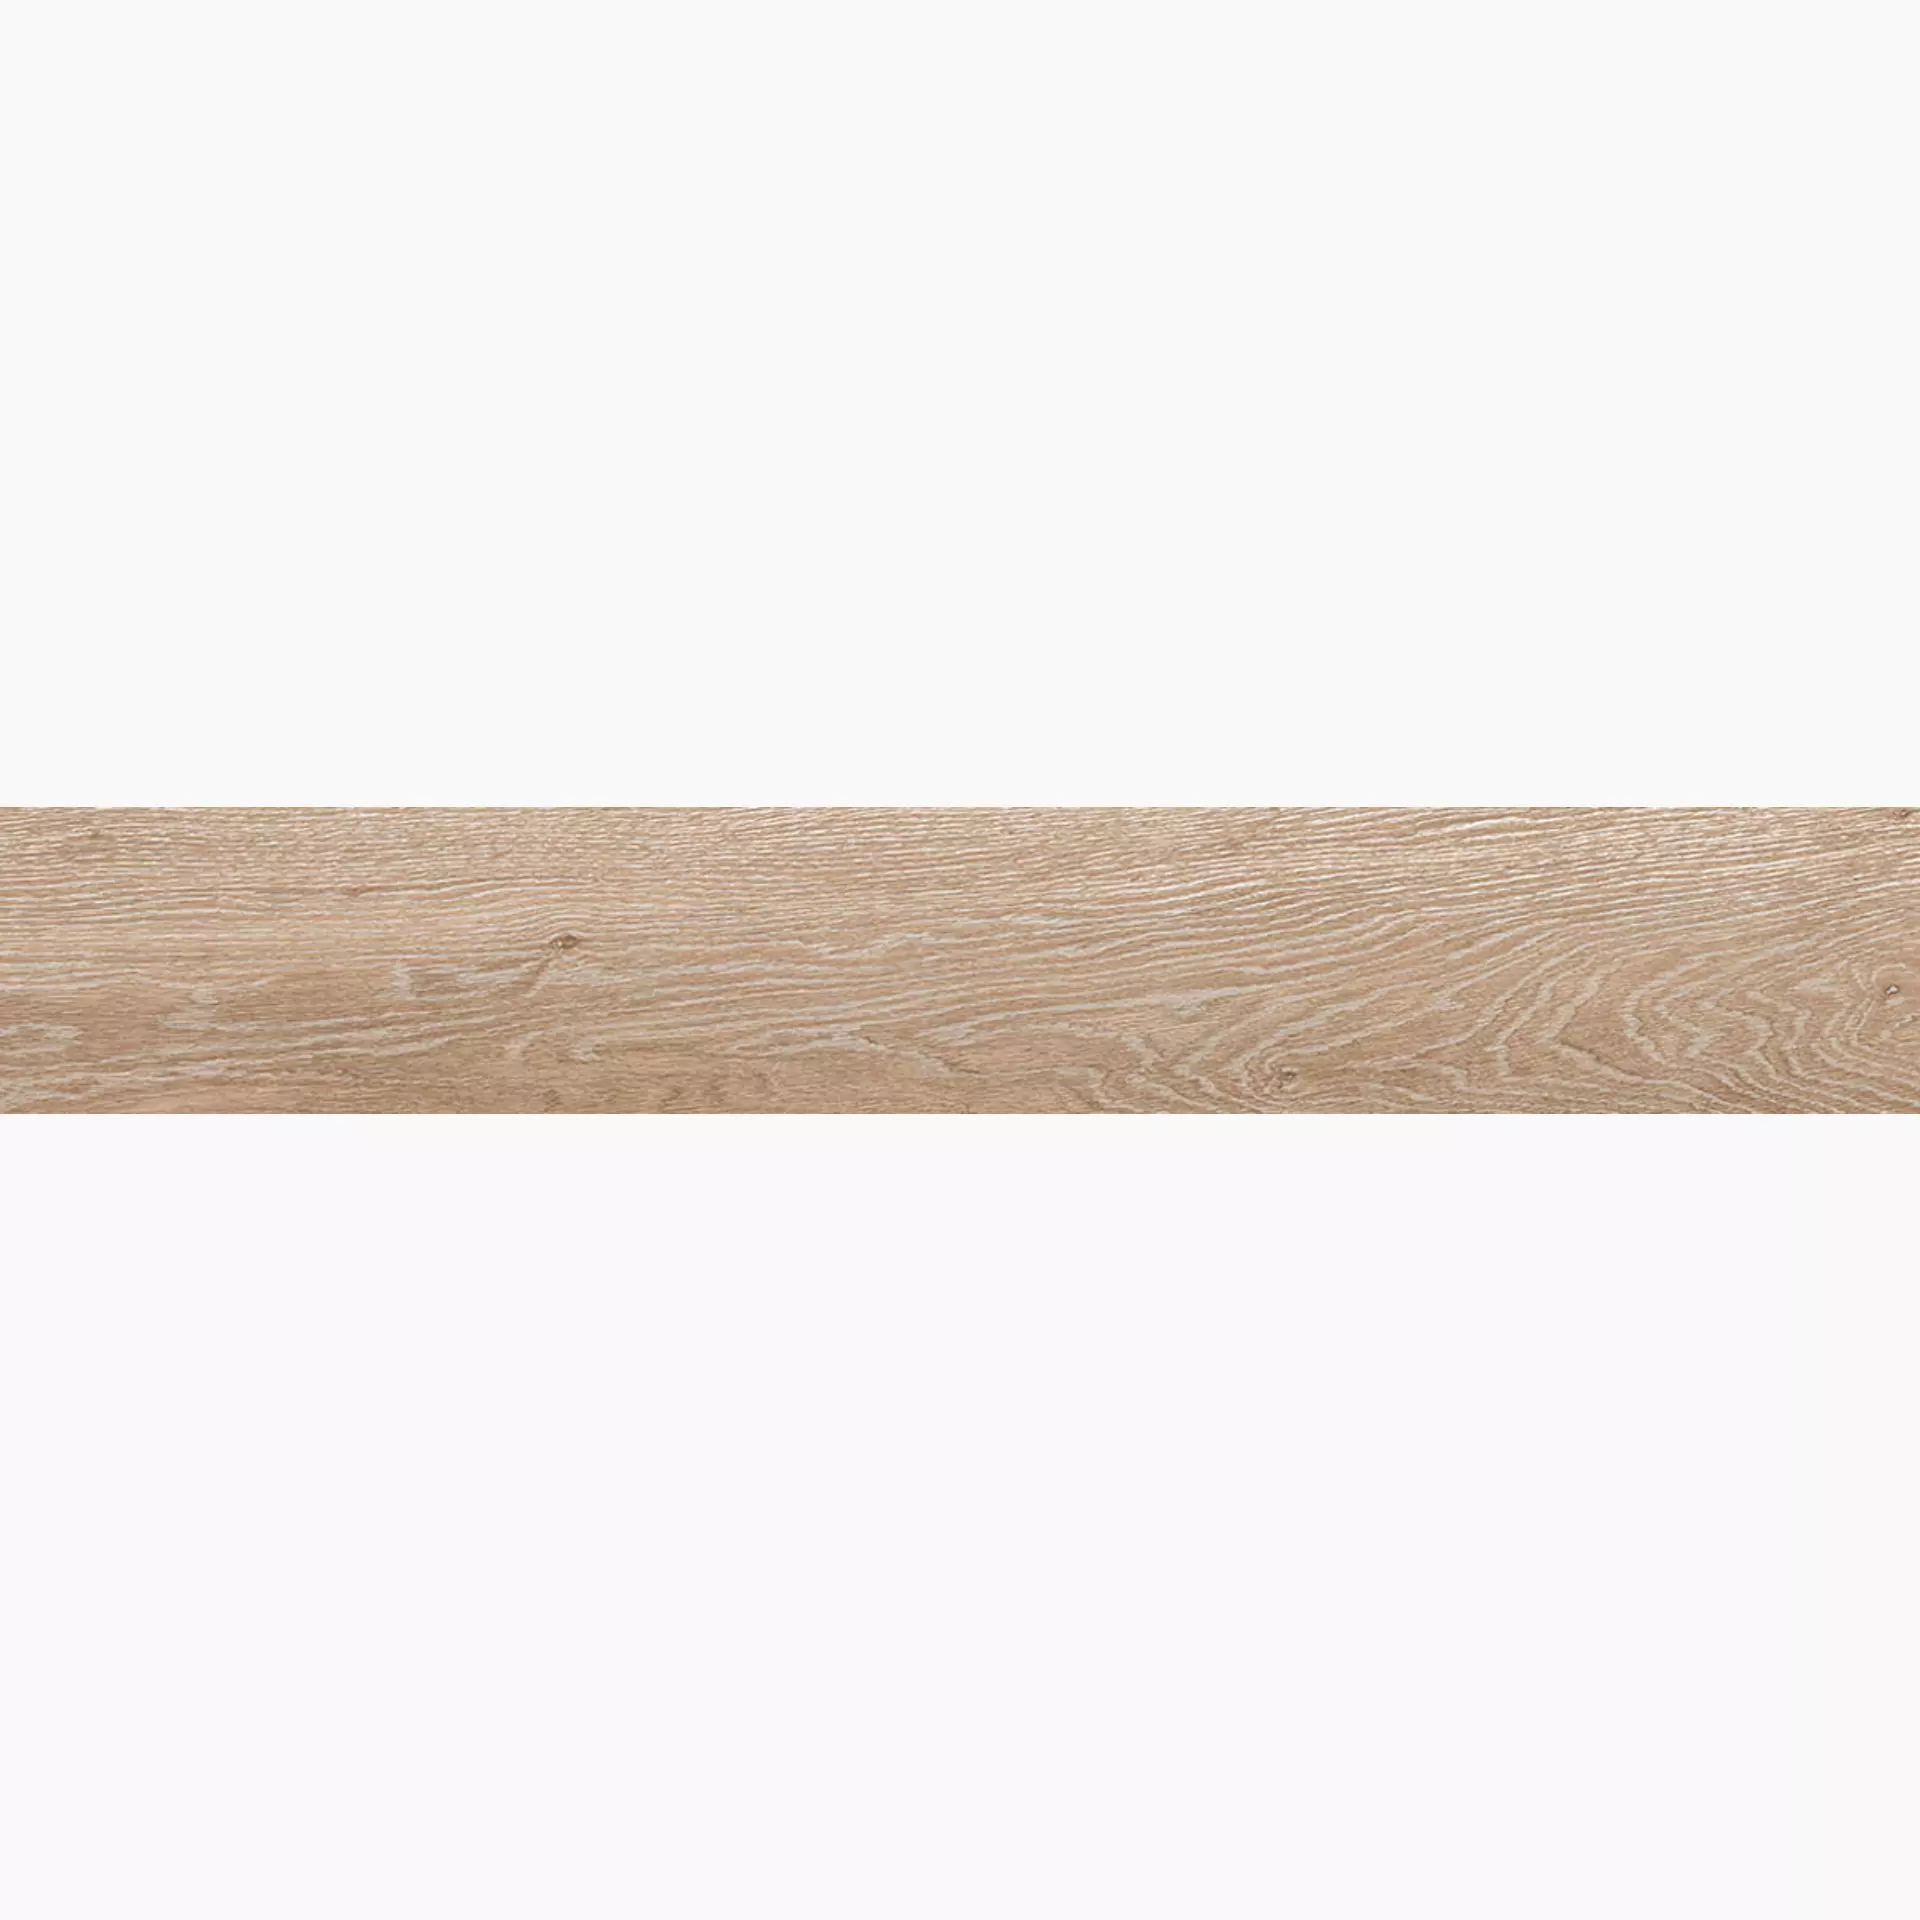 La Faenza Legno Dark Beige Natural Slate Cut Matt 168055 20x120cm rectified 10mm - LEGNO 2012BS RM